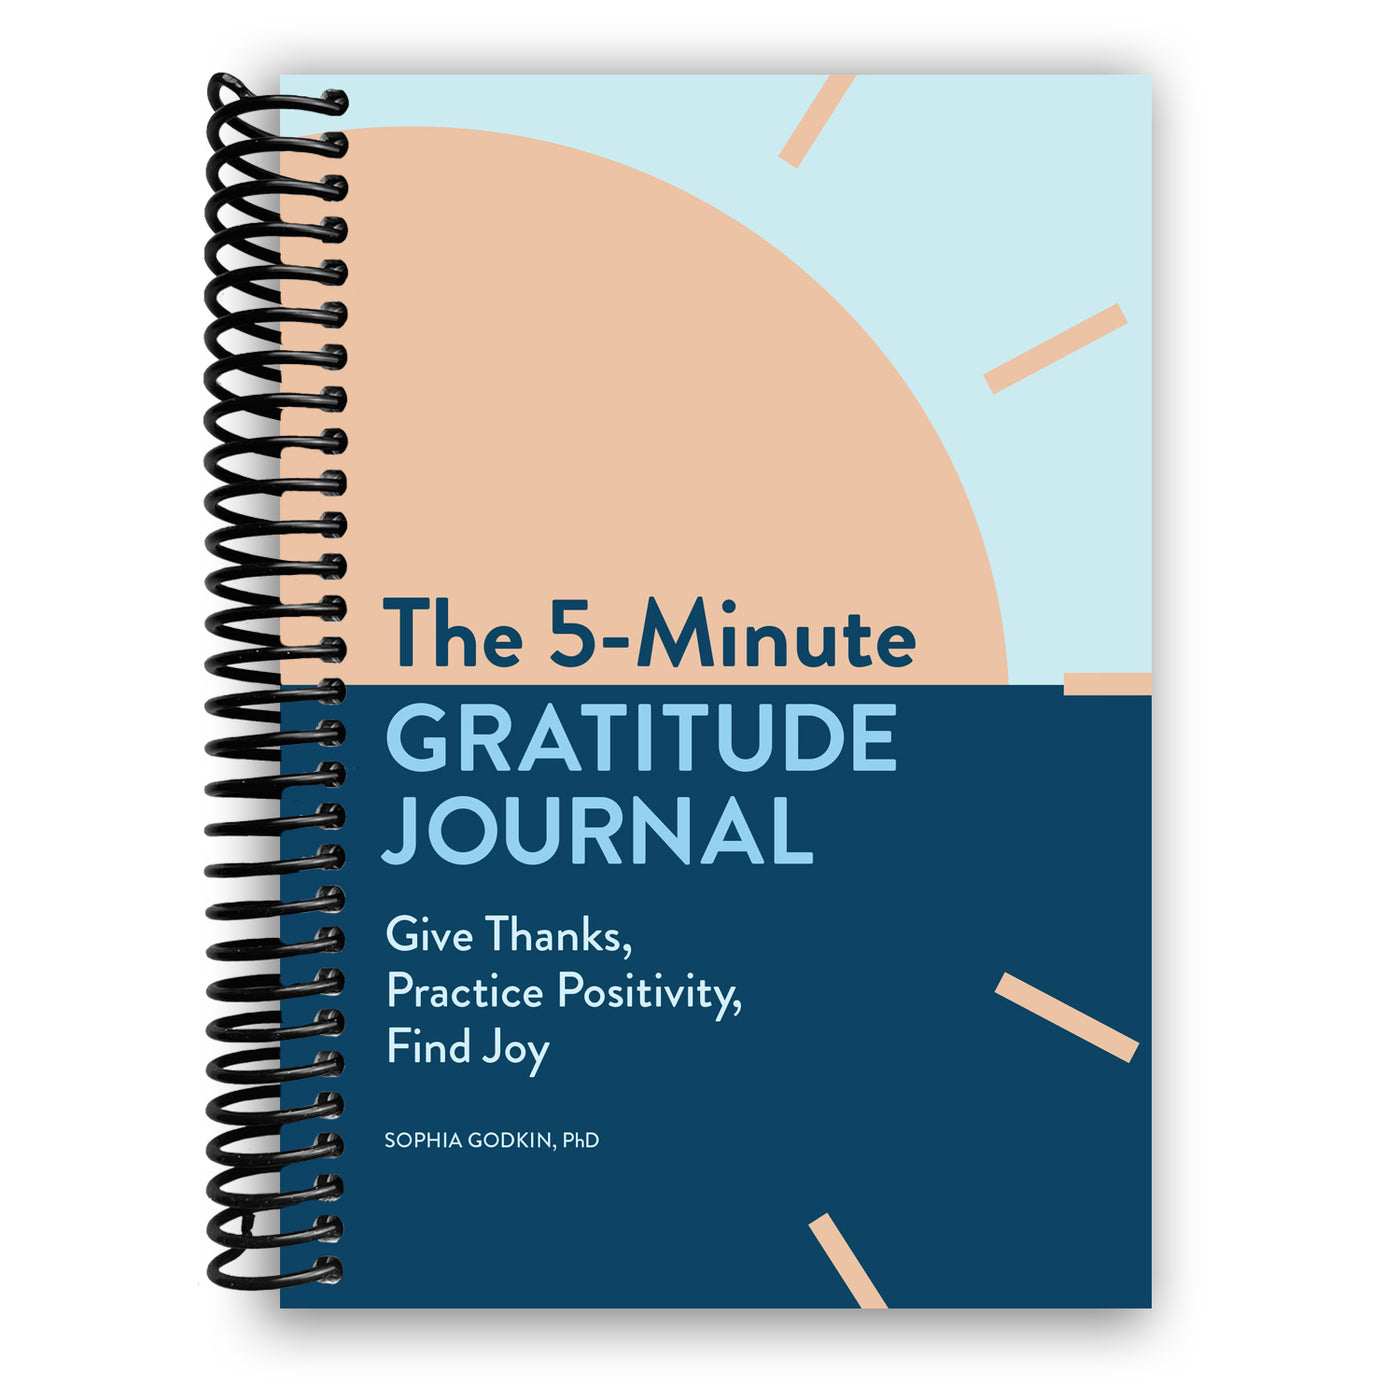 The 5-Minute Gratitude Journal: Give Thanks, Practice Positivity, Find Joy (Spiral Bound)